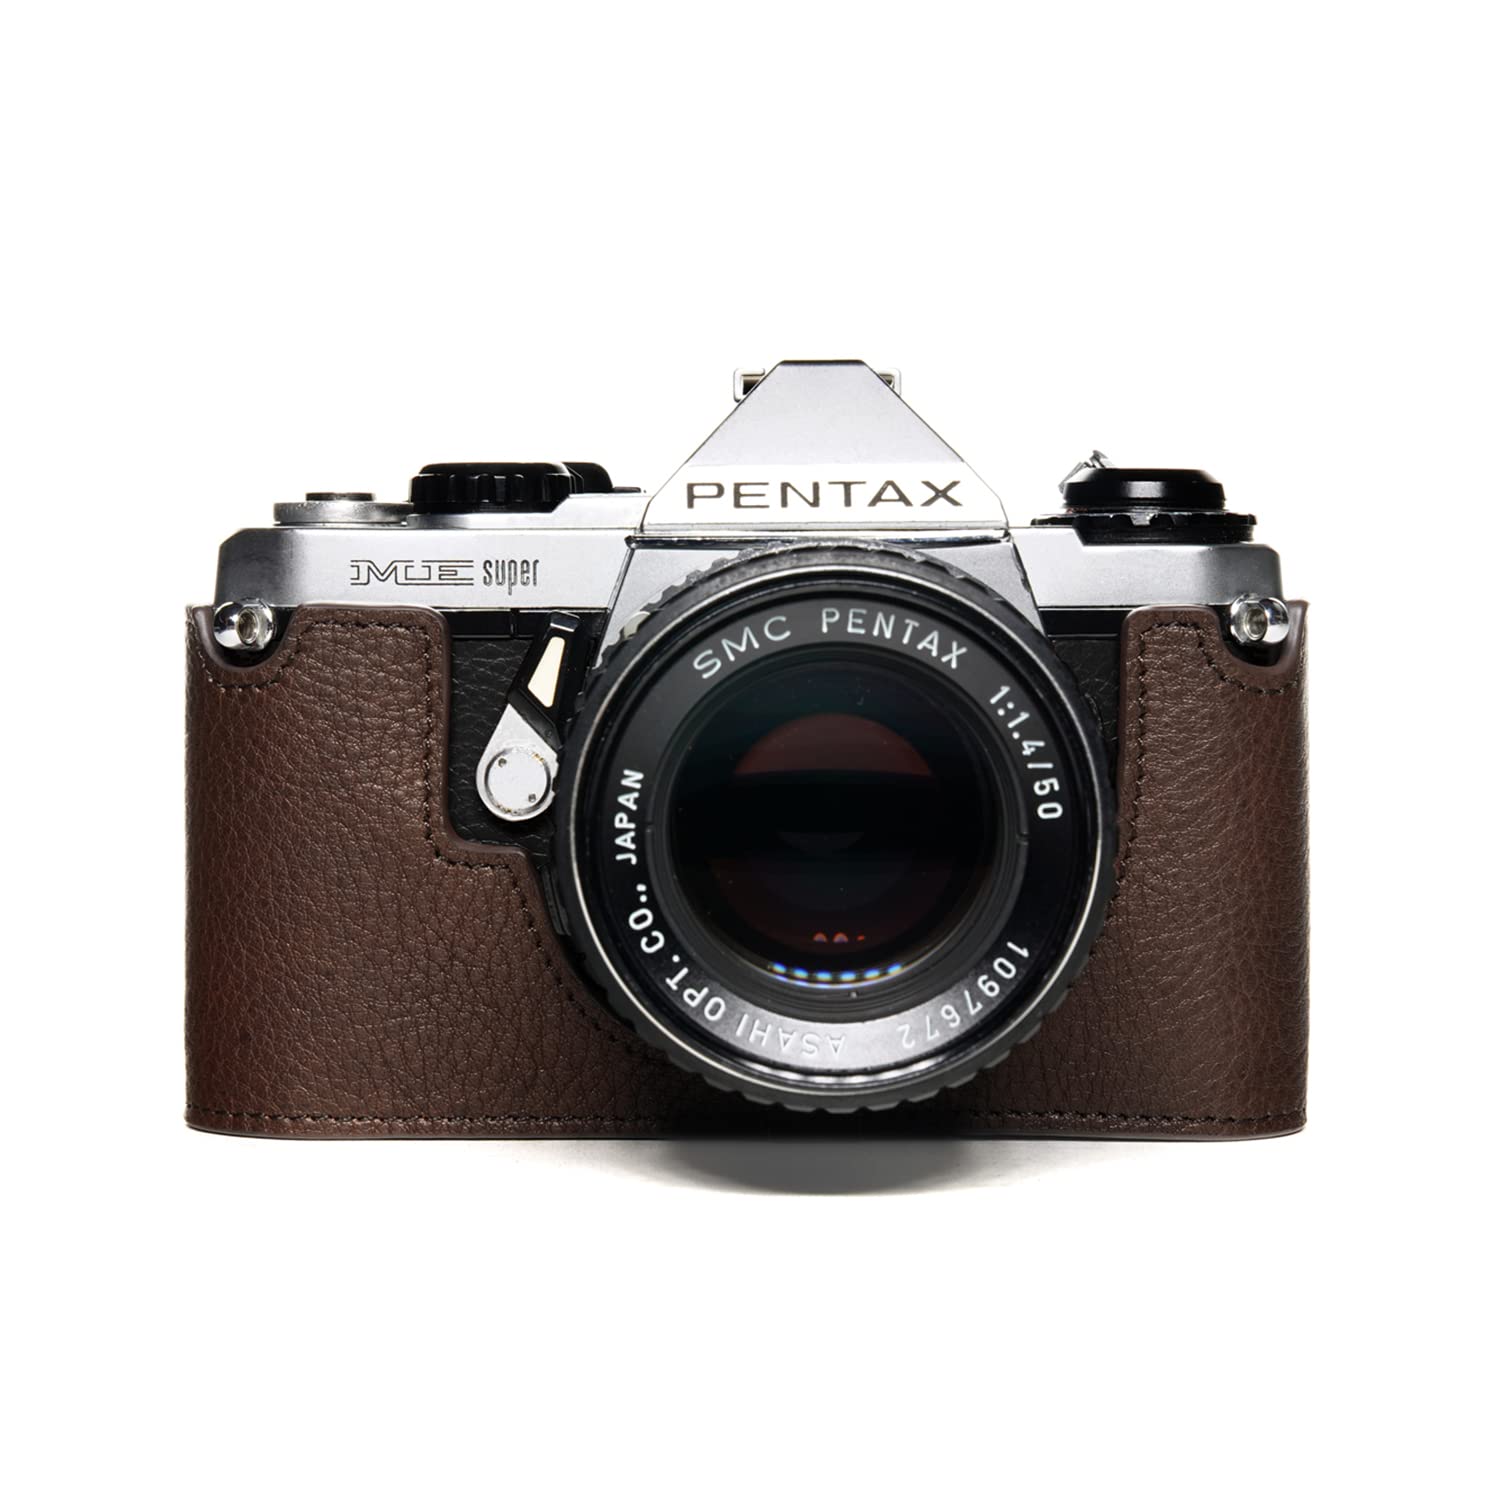 TP Handmade Genuine Real Leather Half Camera Case Bag Cover for Pentax ME ME Super MV MV-1 (Coffee, CameraCase)